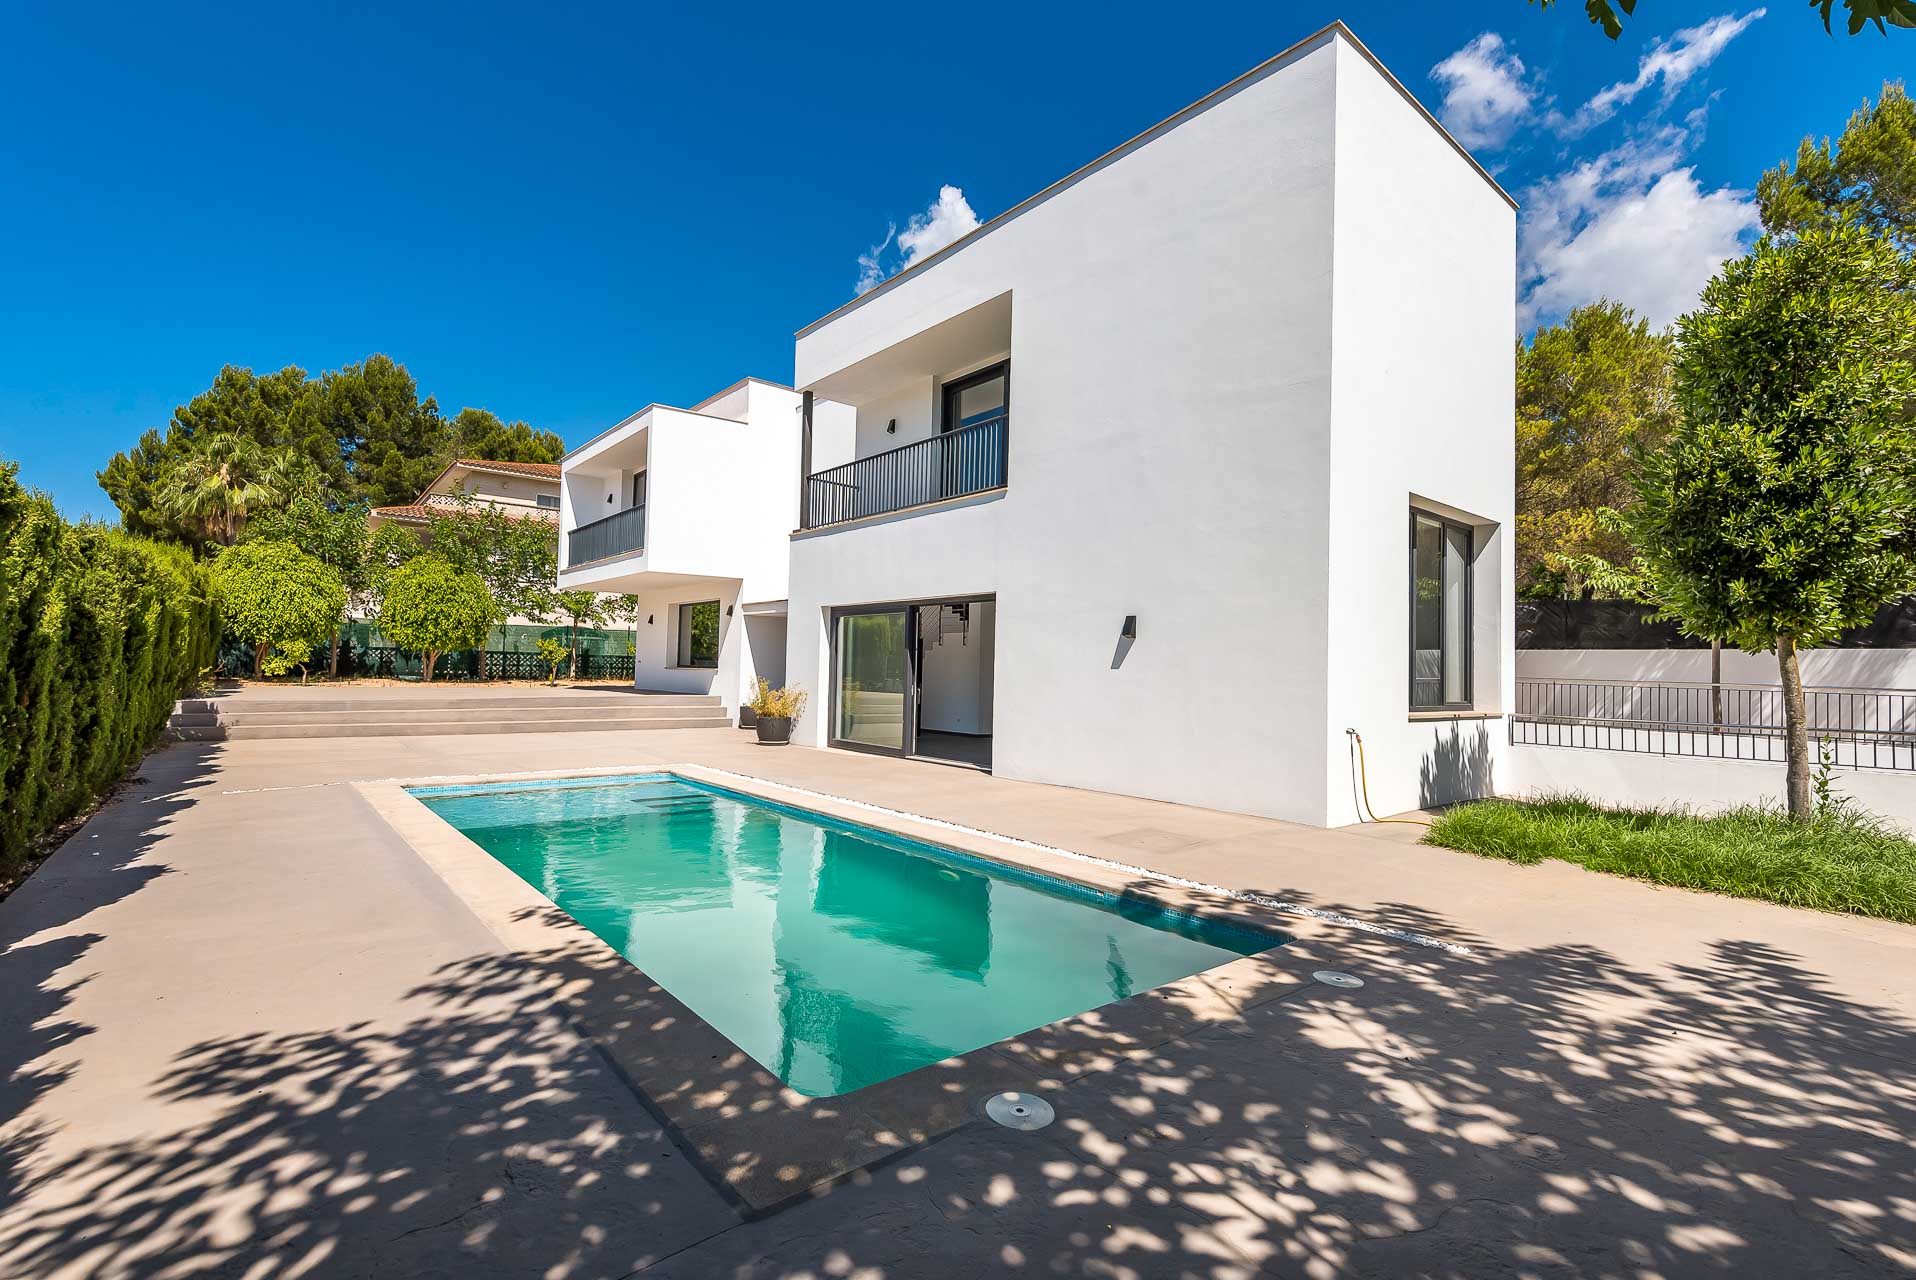 Moderne Familienvilla mit Pool in Costa de la Calma - Sonnenterrasse mit Salzwasserpool